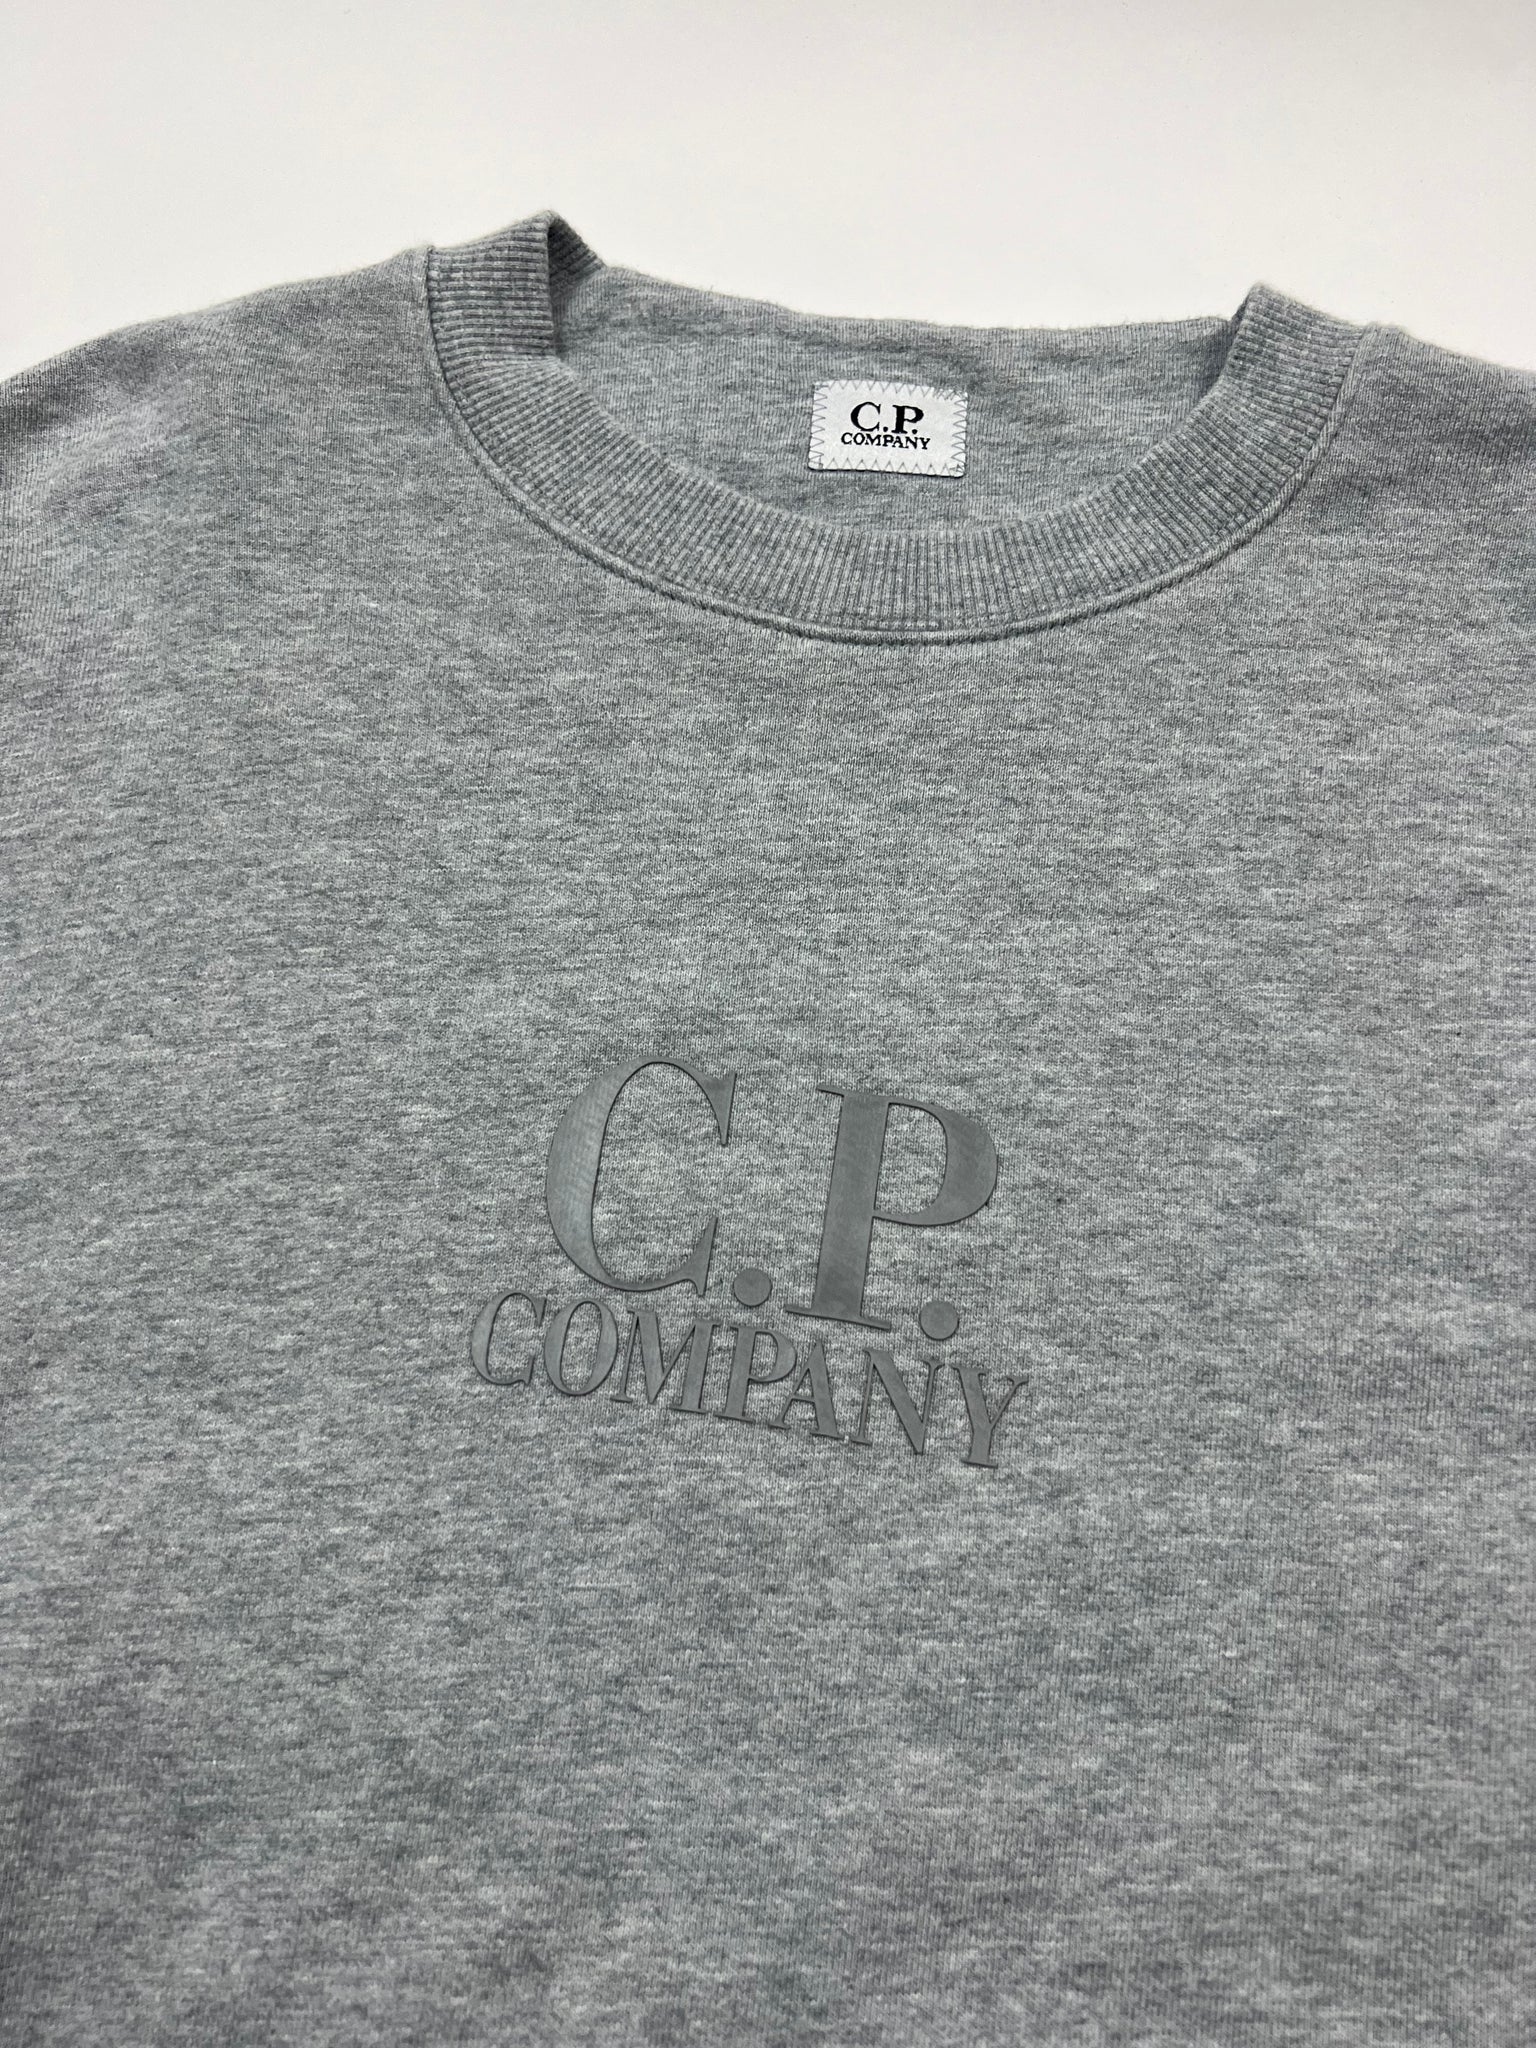 C.P. Company Sweater (S)